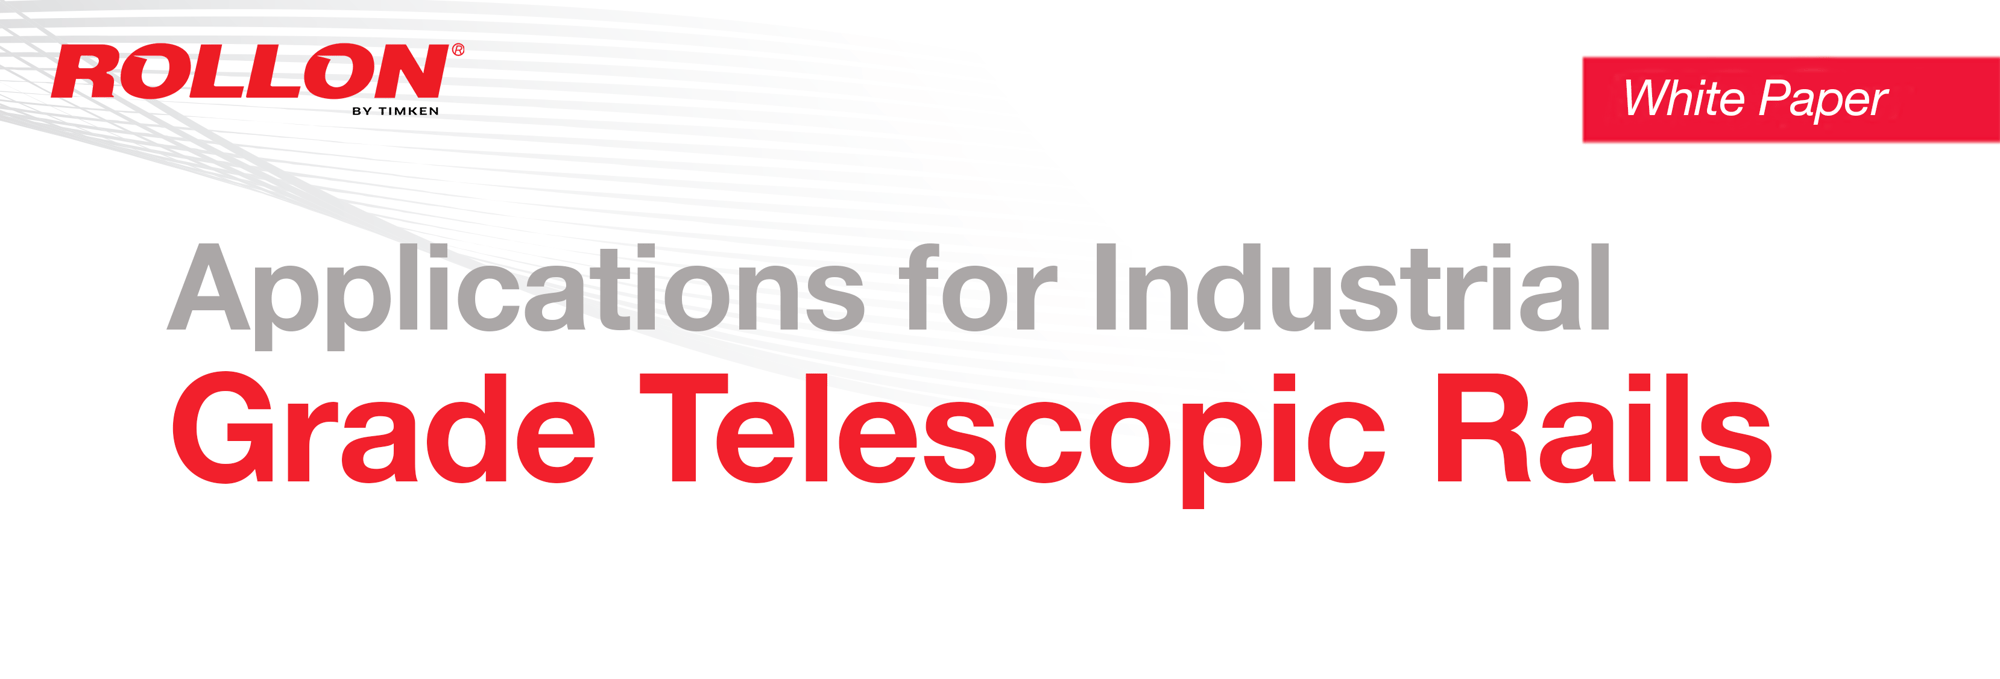 Applications for Industrial Grade Telescopic Rails